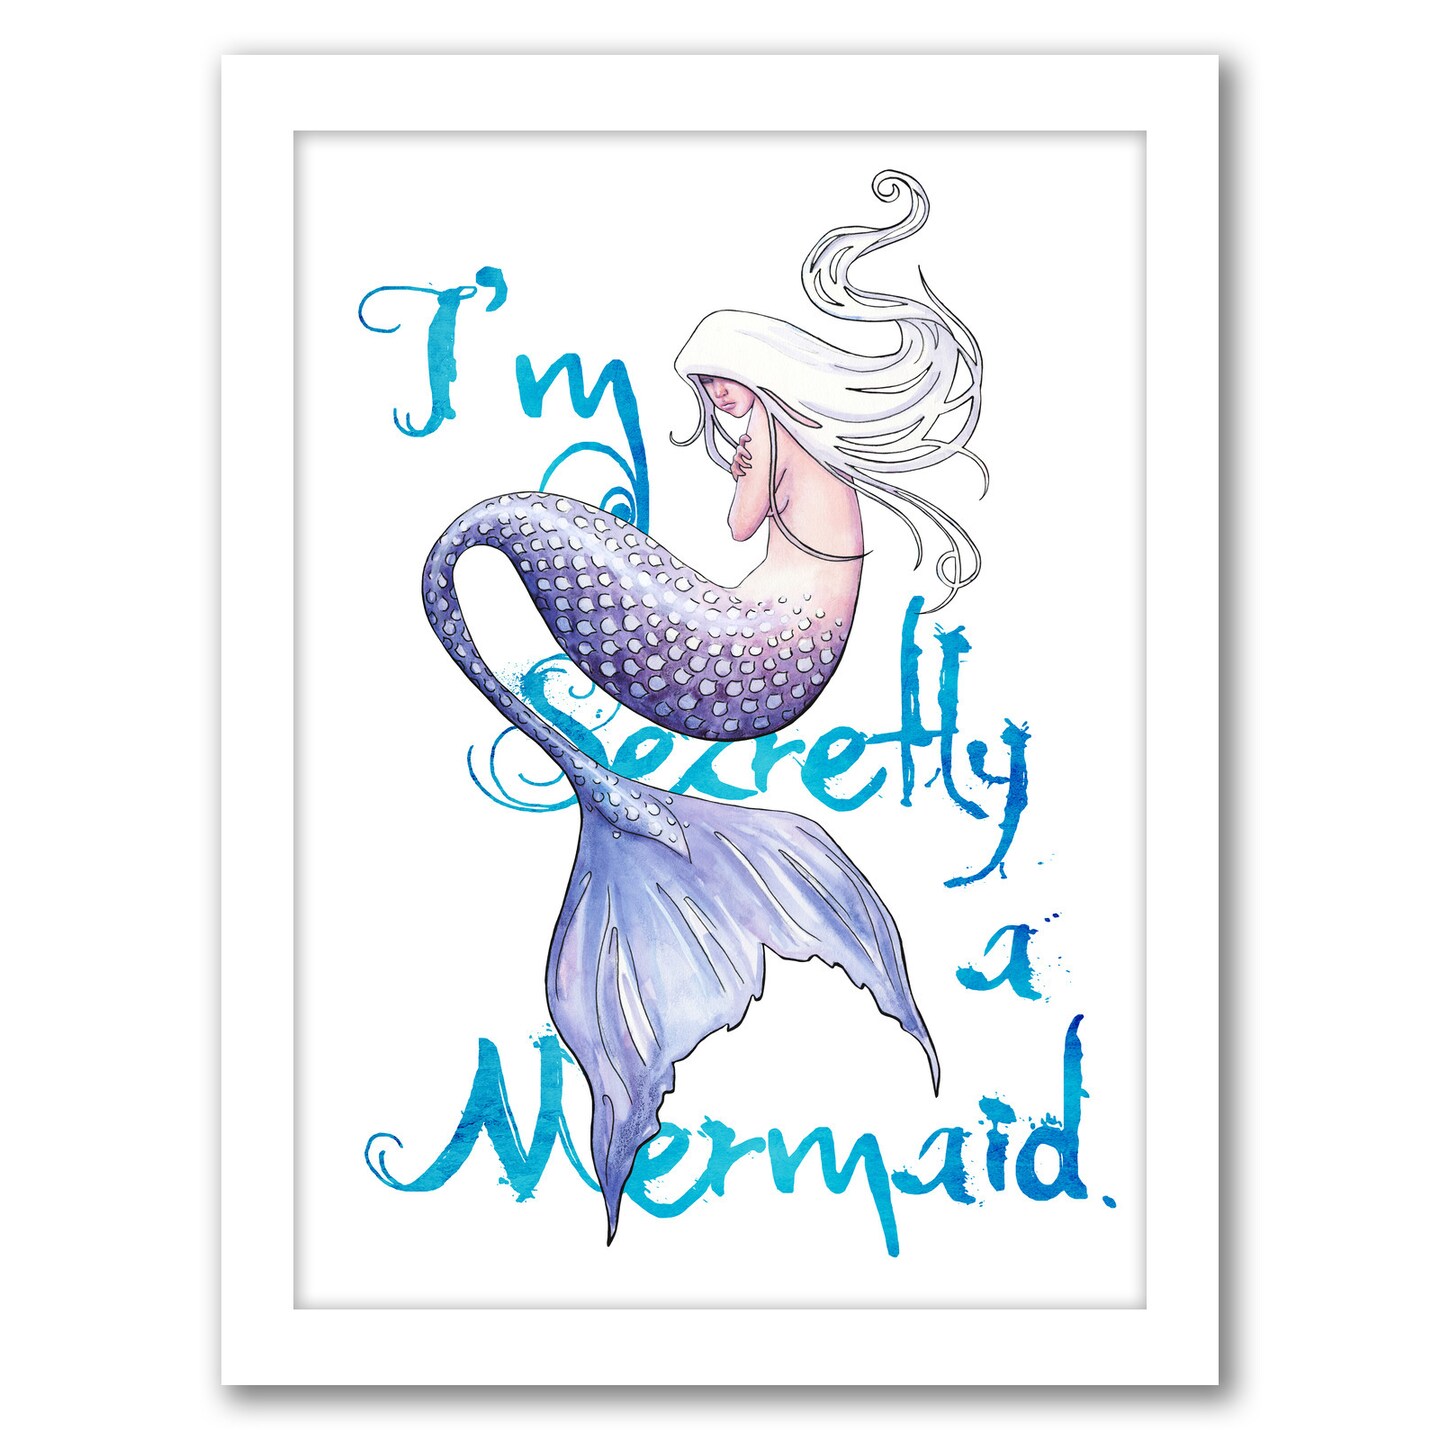 Secretly A Mermaid by Sam Nagel Frame  - Americanflat